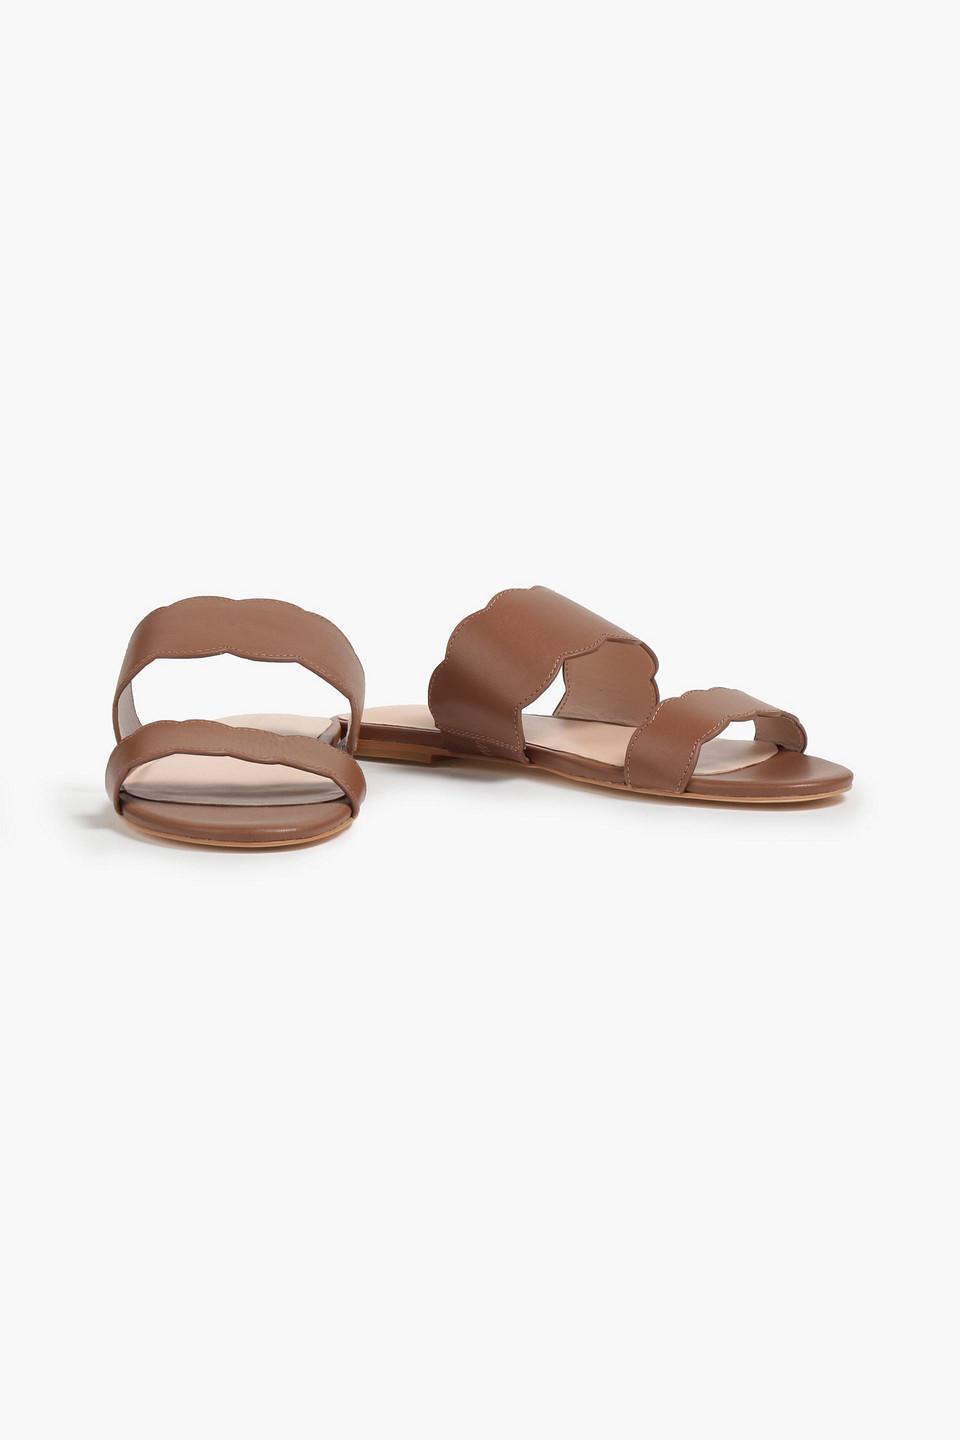 Stuart Weitzman Santorini Scalloped Leather Slides in Brown | Lyst